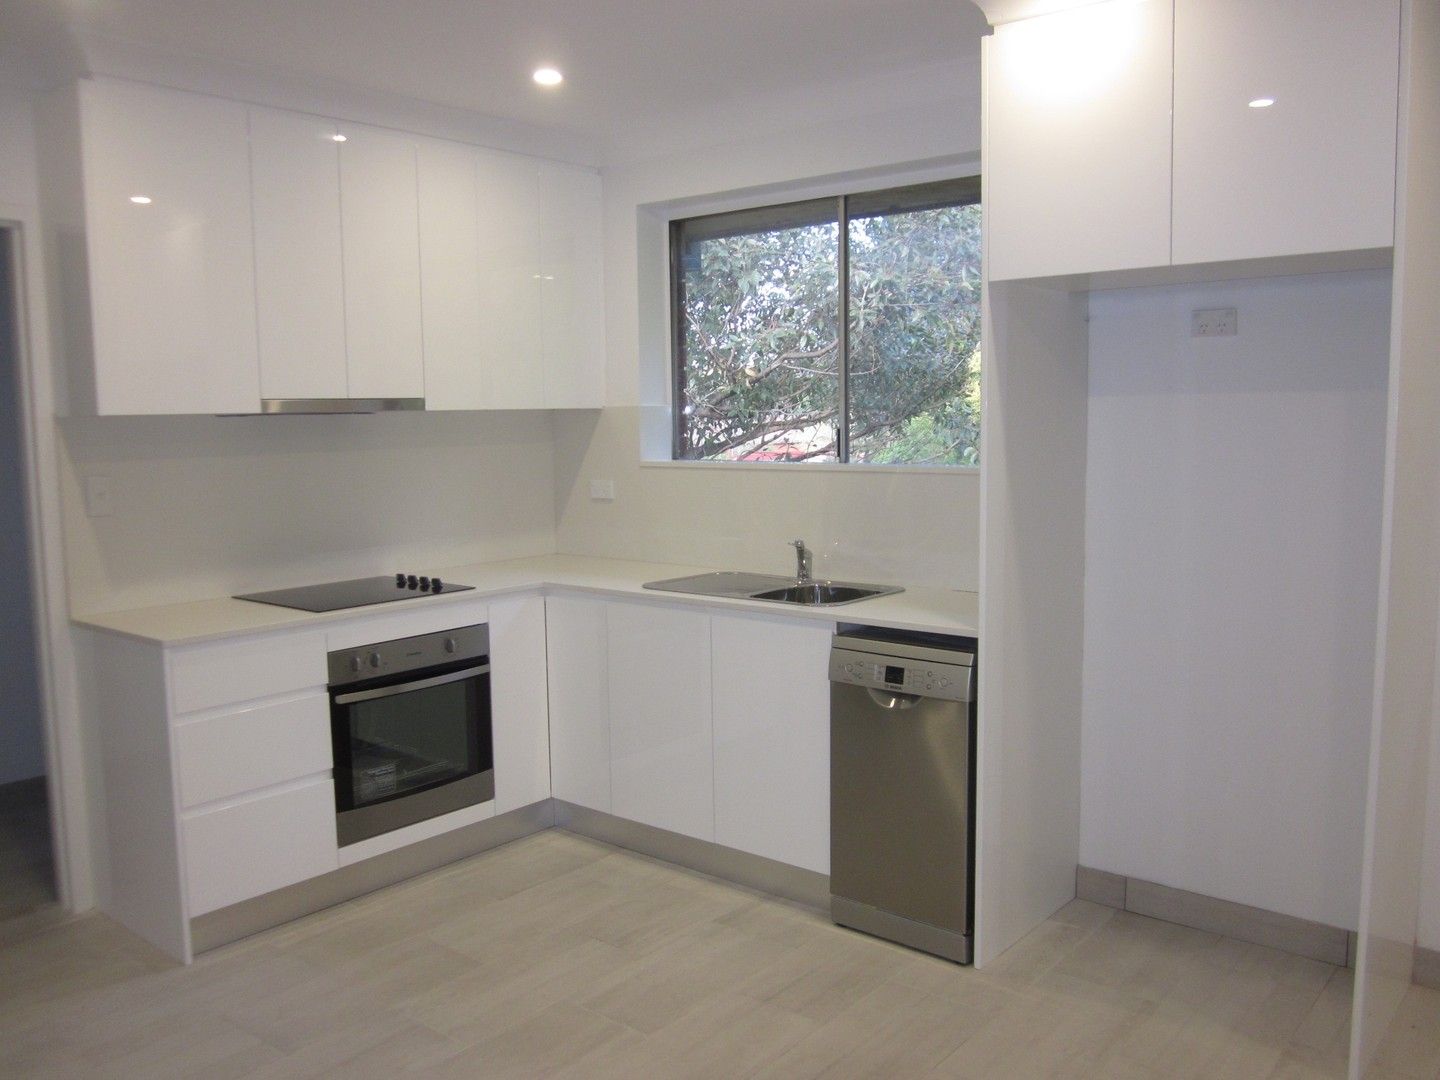 2 bedrooms Apartment / Unit / Flat in 5/51 Macdonald Street LAKEMBA NSW, 2195